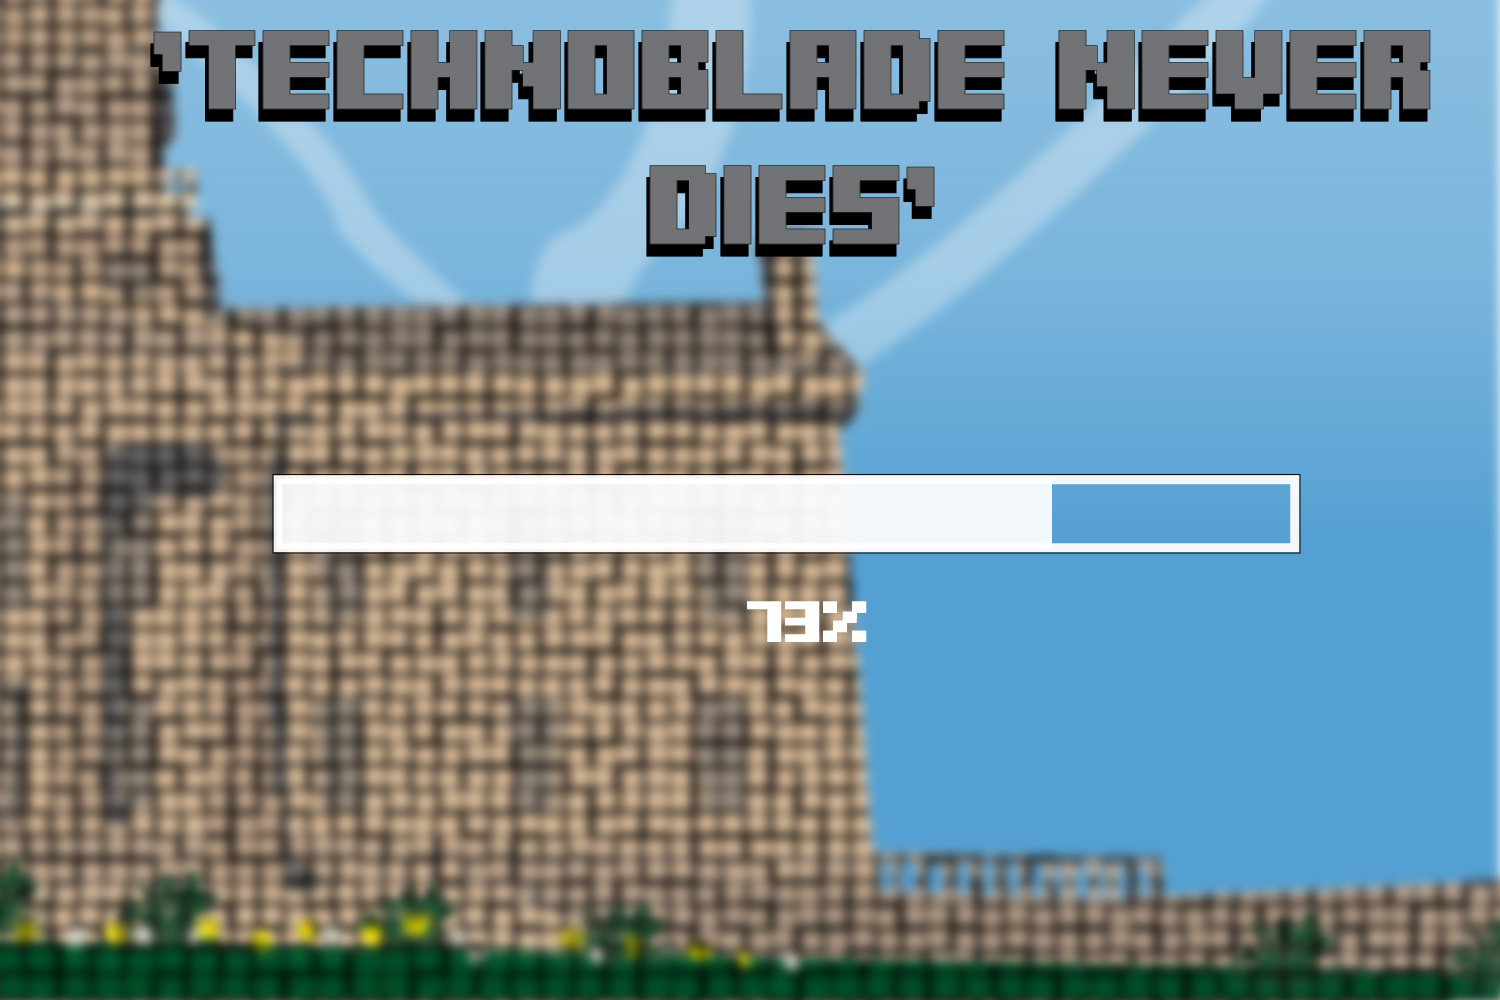 Technoblade never dies